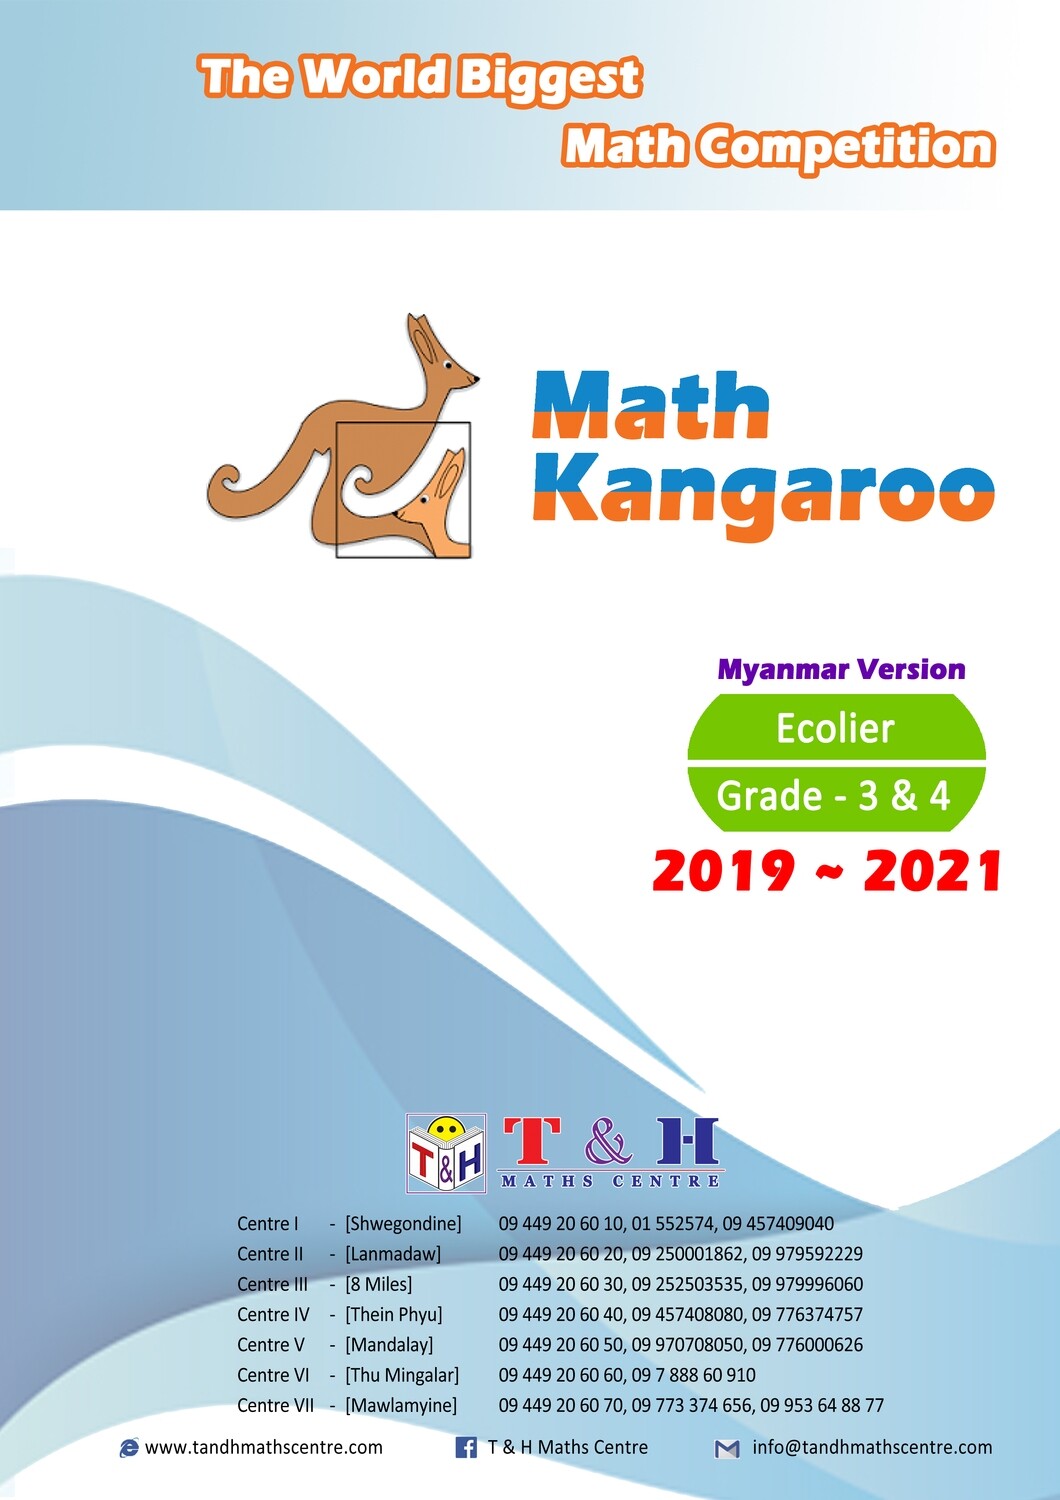 Kangaroo (Ecolier) Grade 3 & 4 (2019 to 2021)